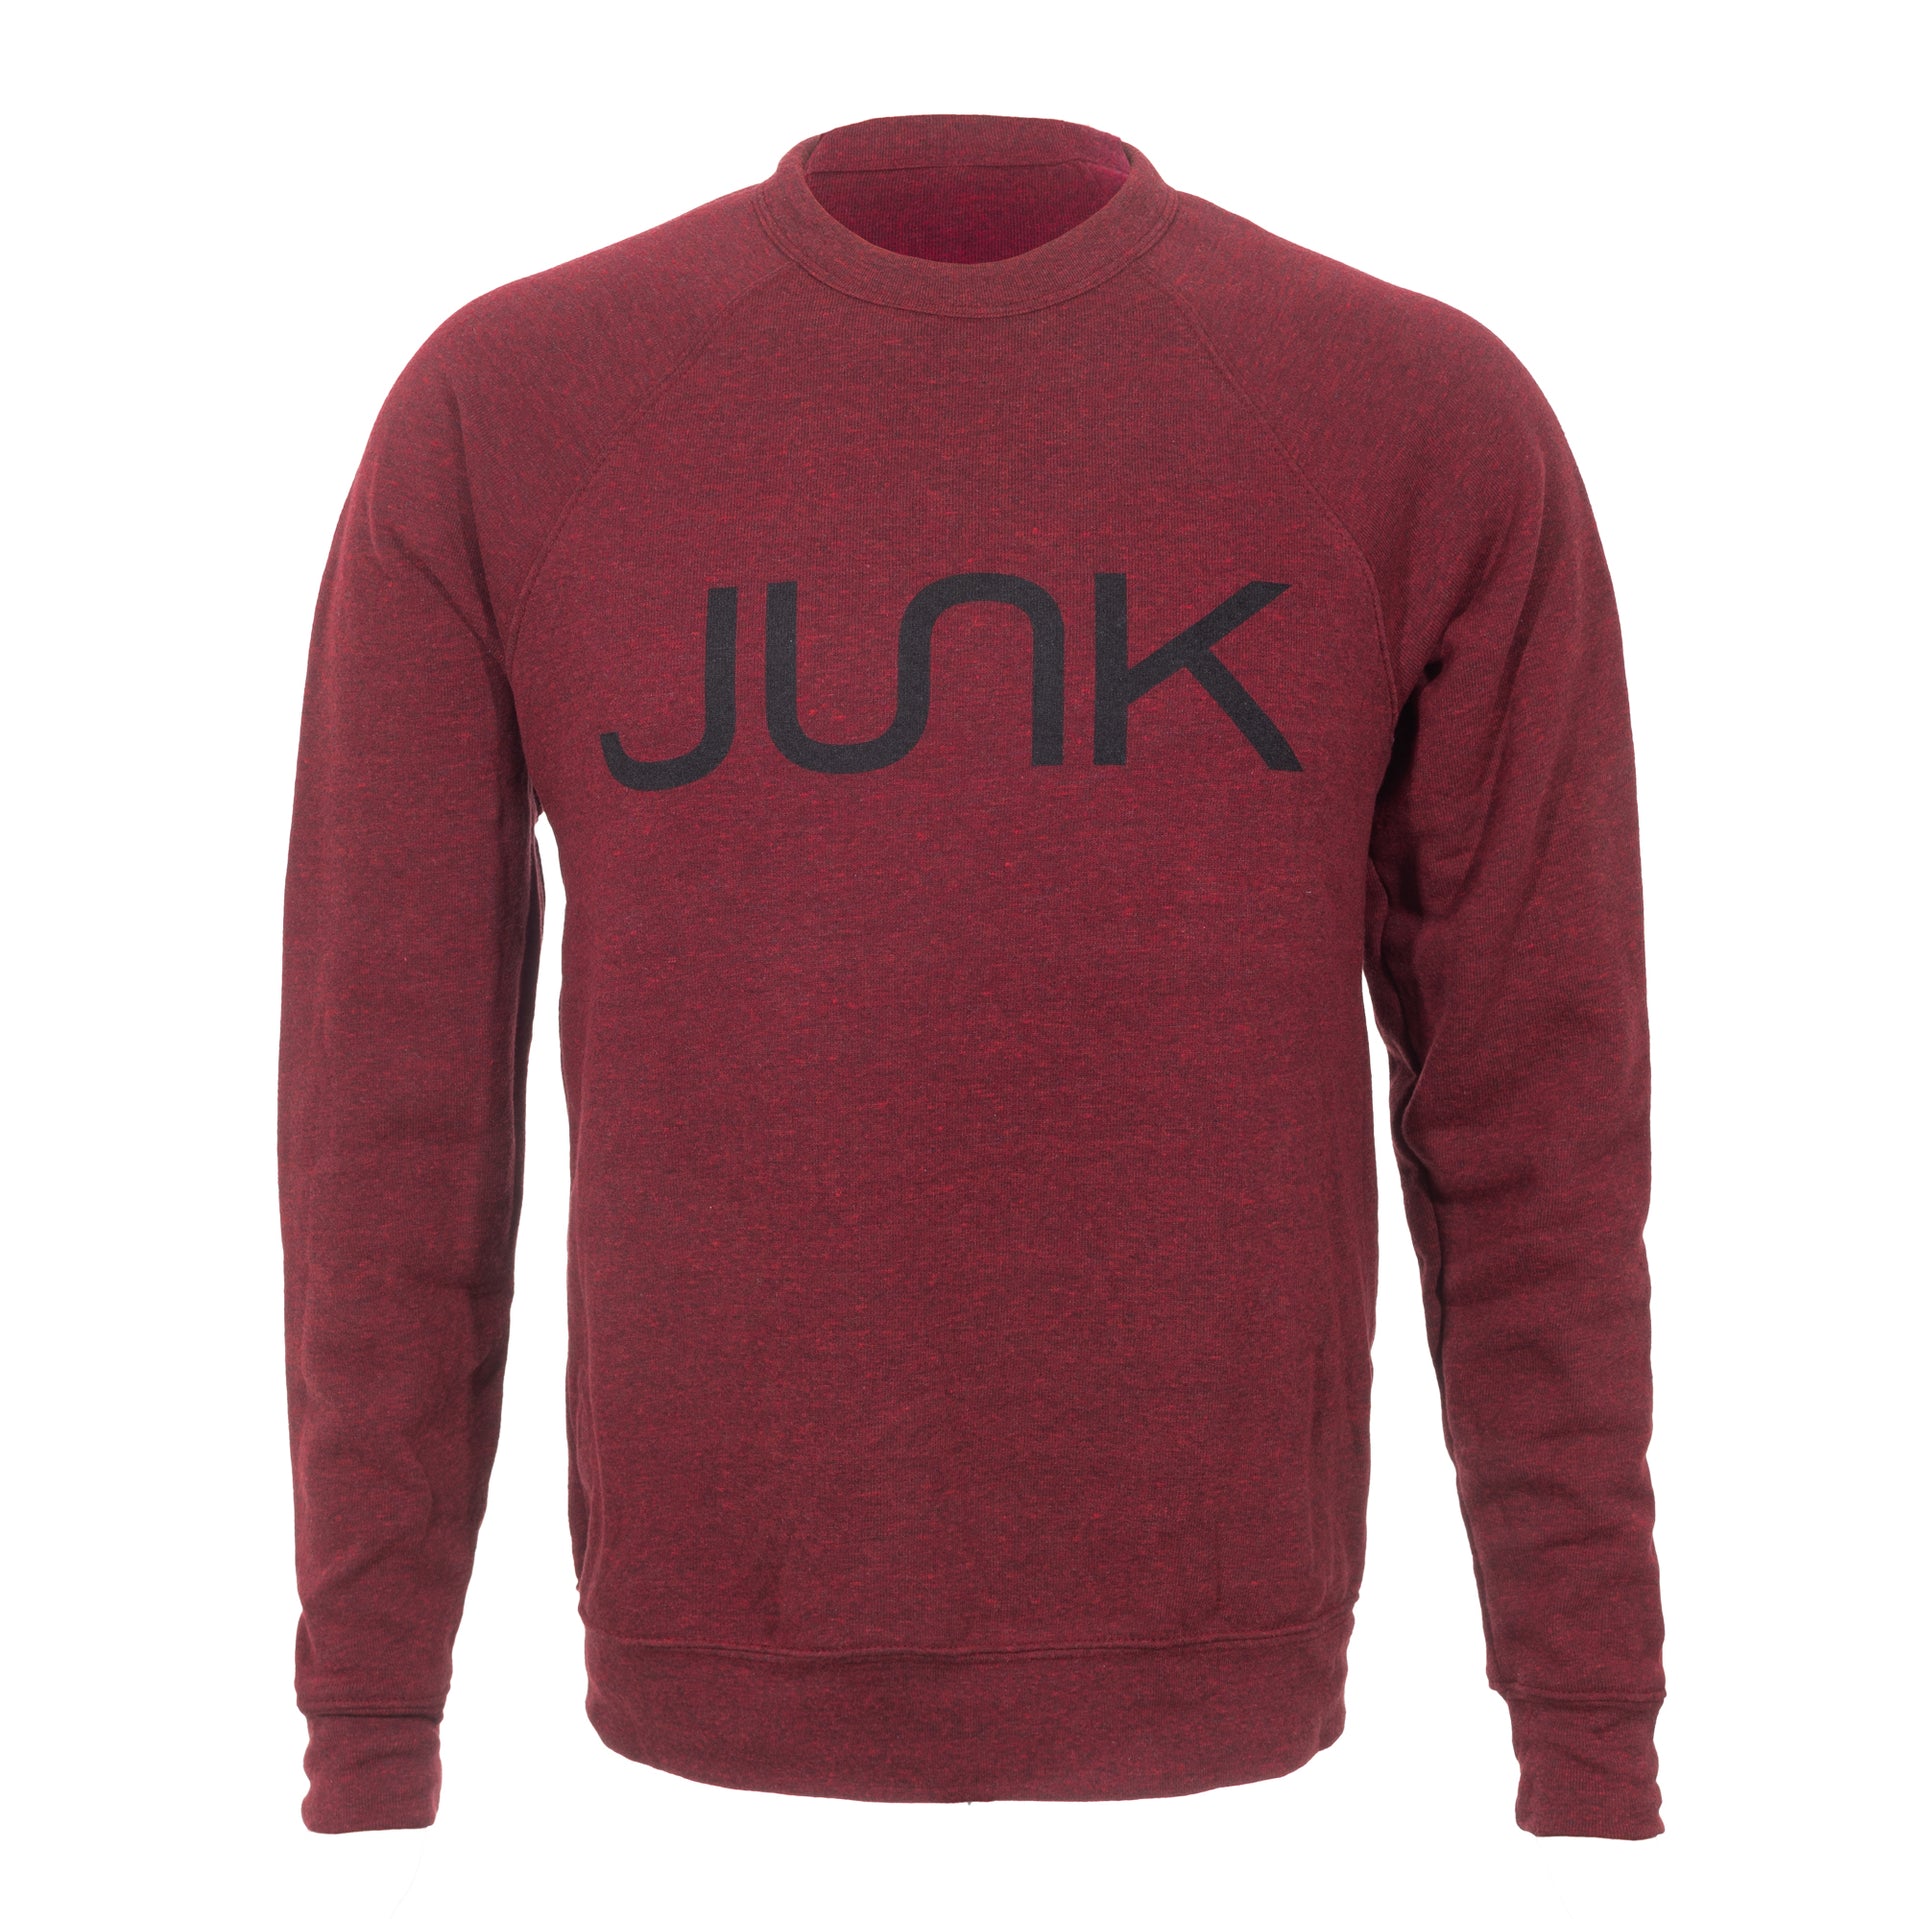 JUNK Heathered Cardinal Crew Sweatshirt - View 1